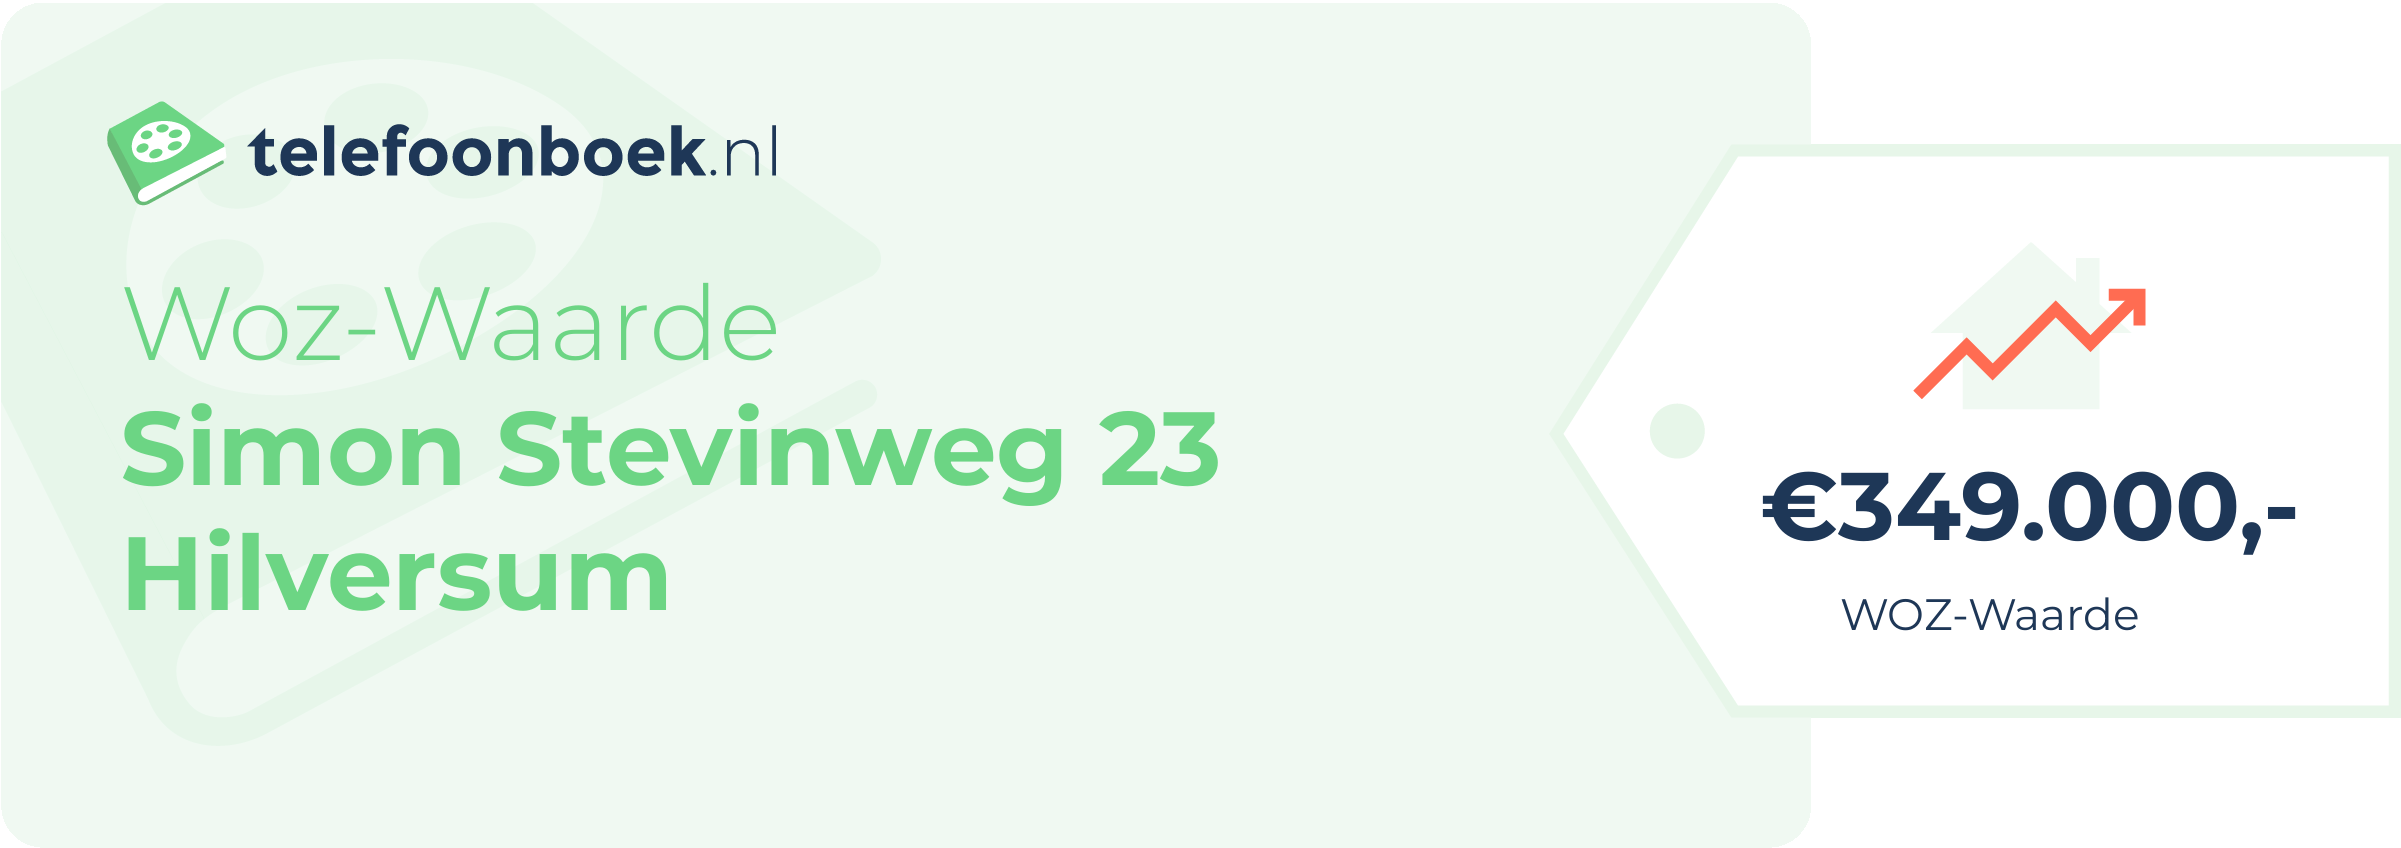 WOZ-waarde Simon Stevinweg 23 Hilversum